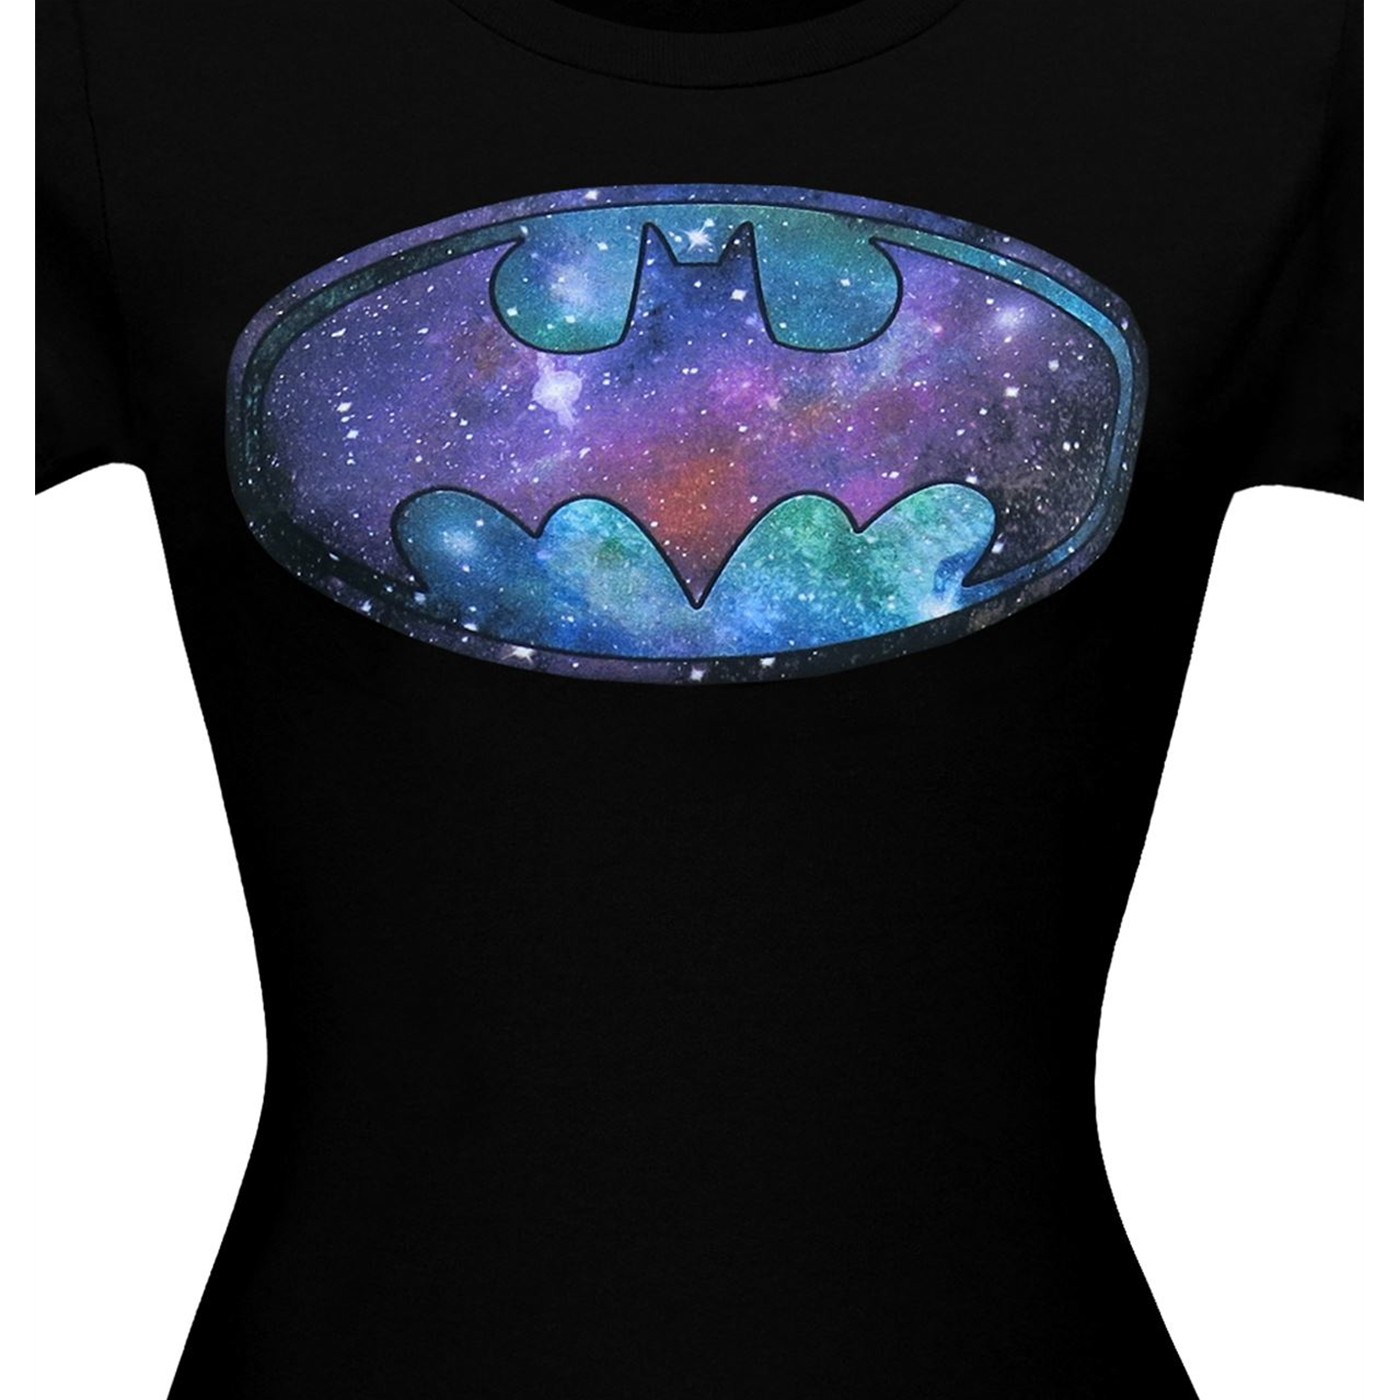 Batman Galaxy Symbol Women's T-Shirt